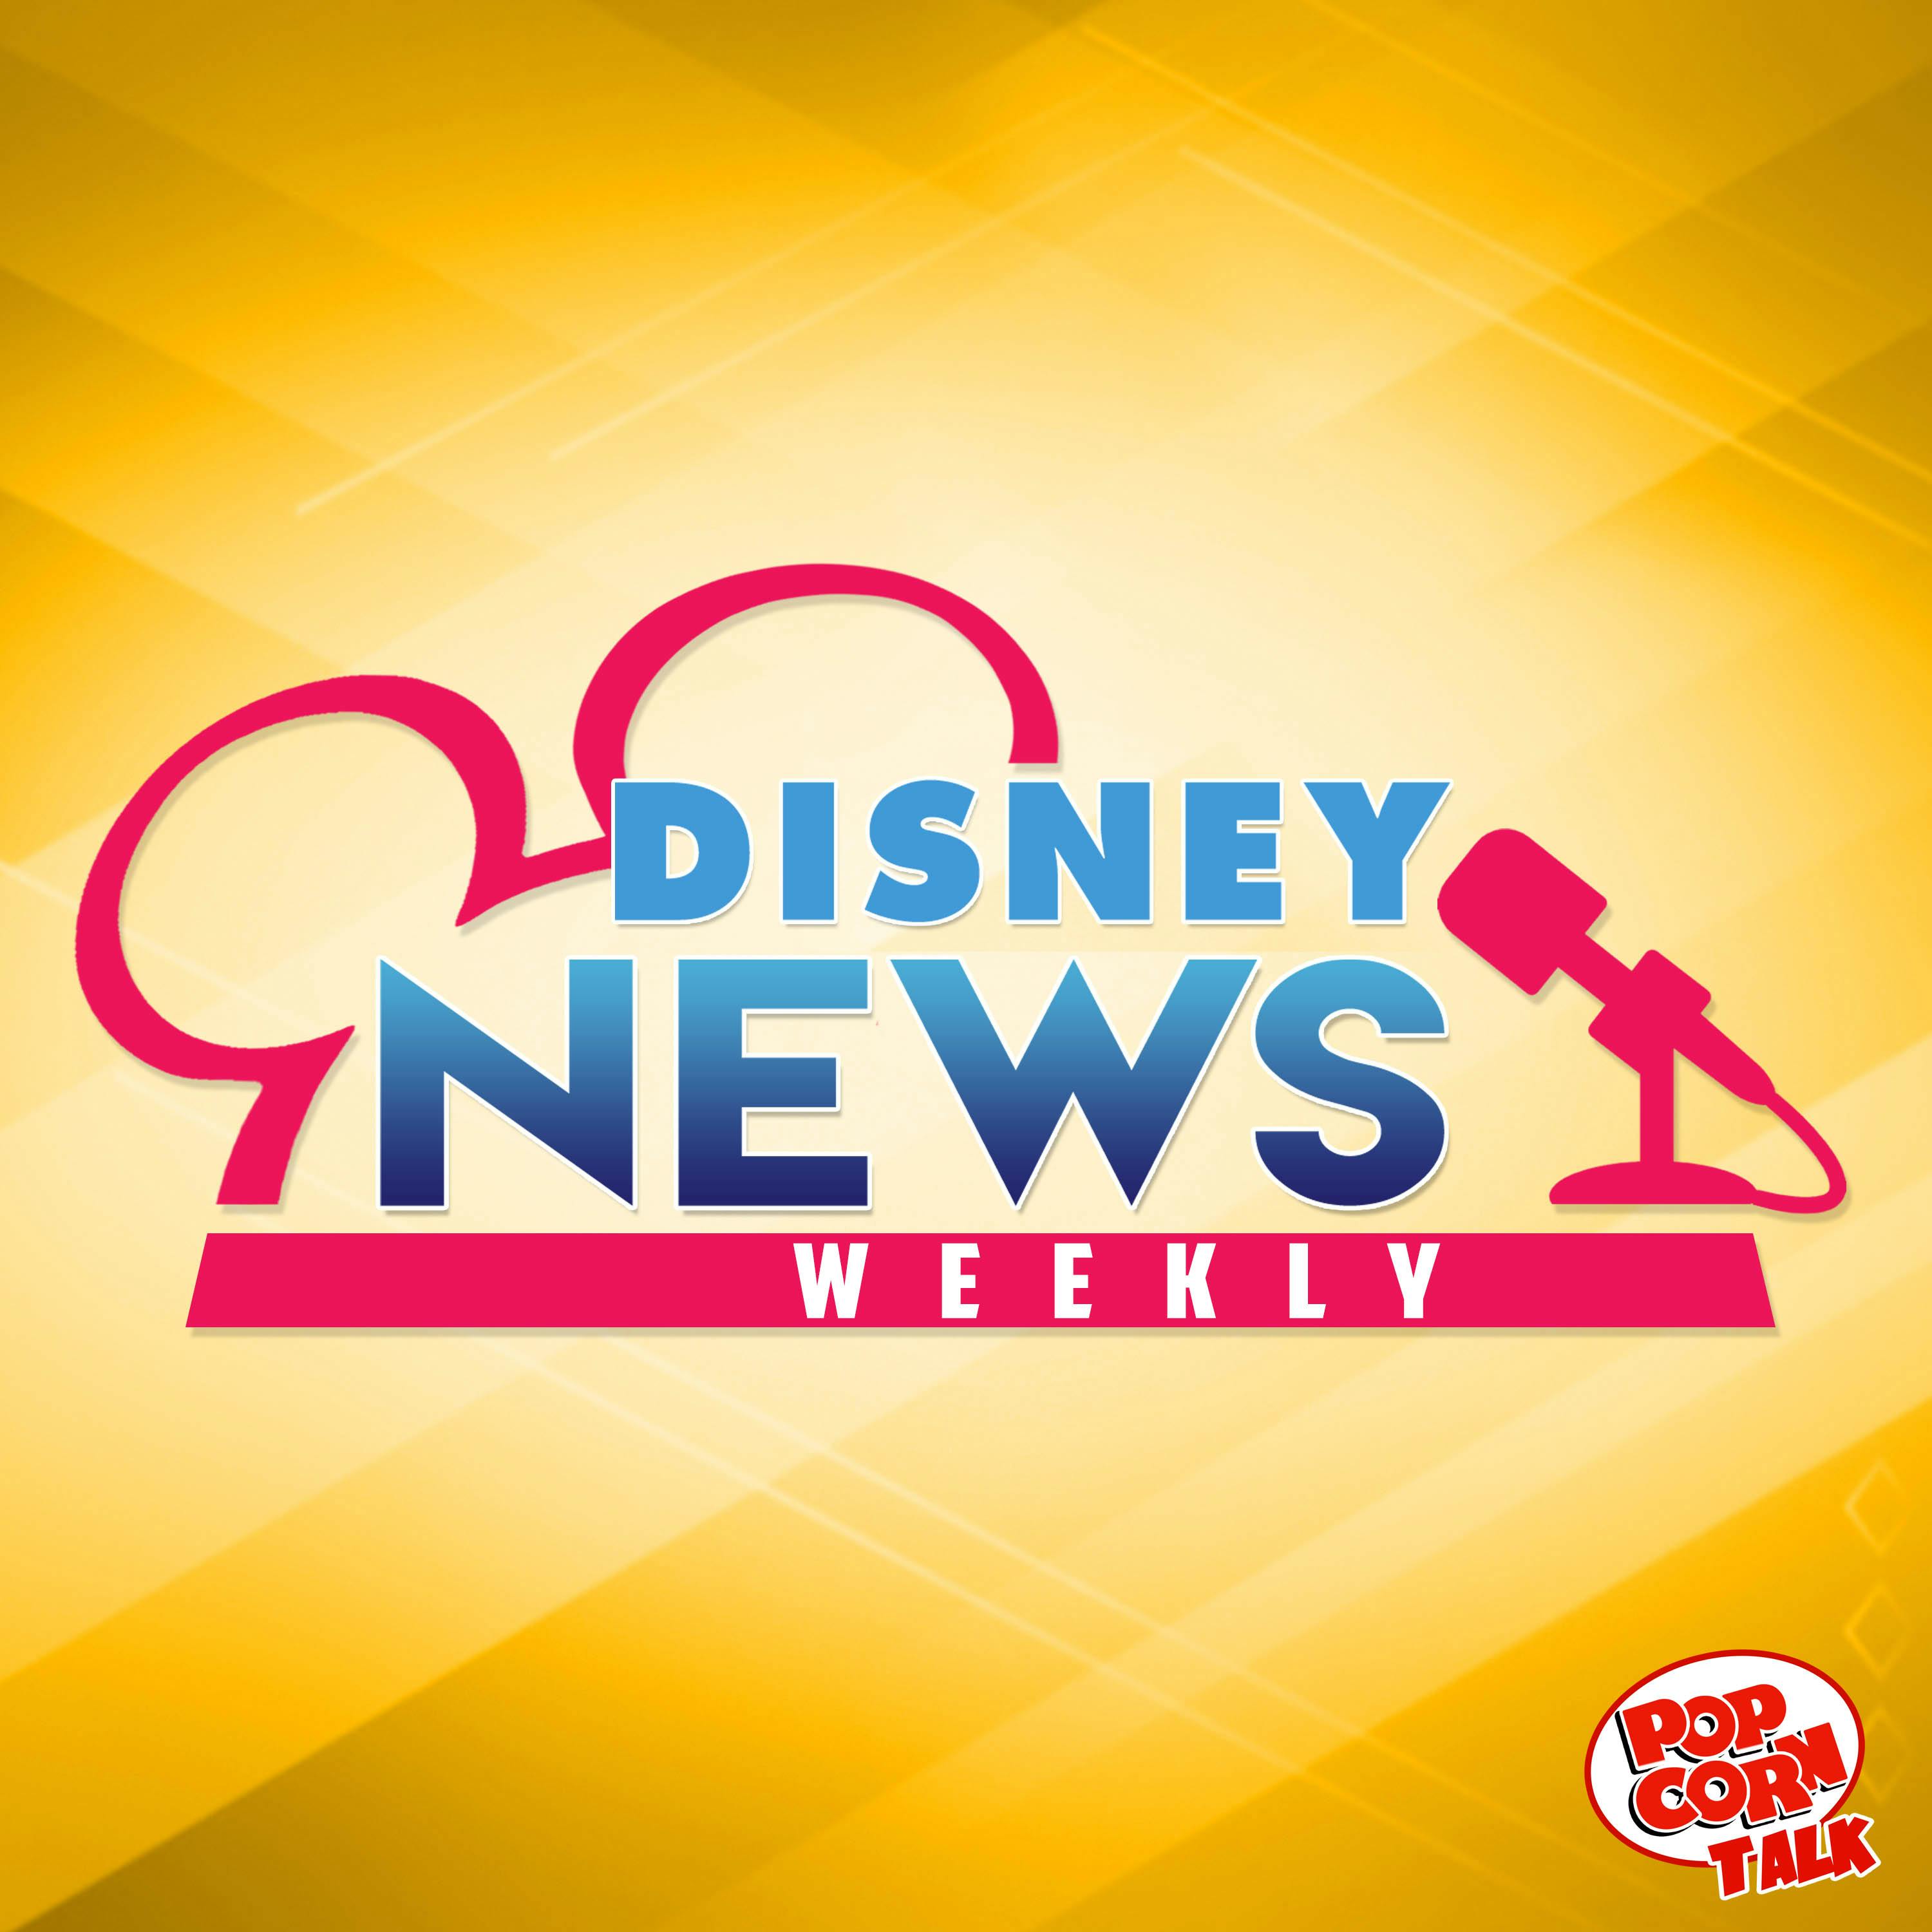 Disney Live Action Little Mermaid Casting Hints? – Disney News Weekly 113